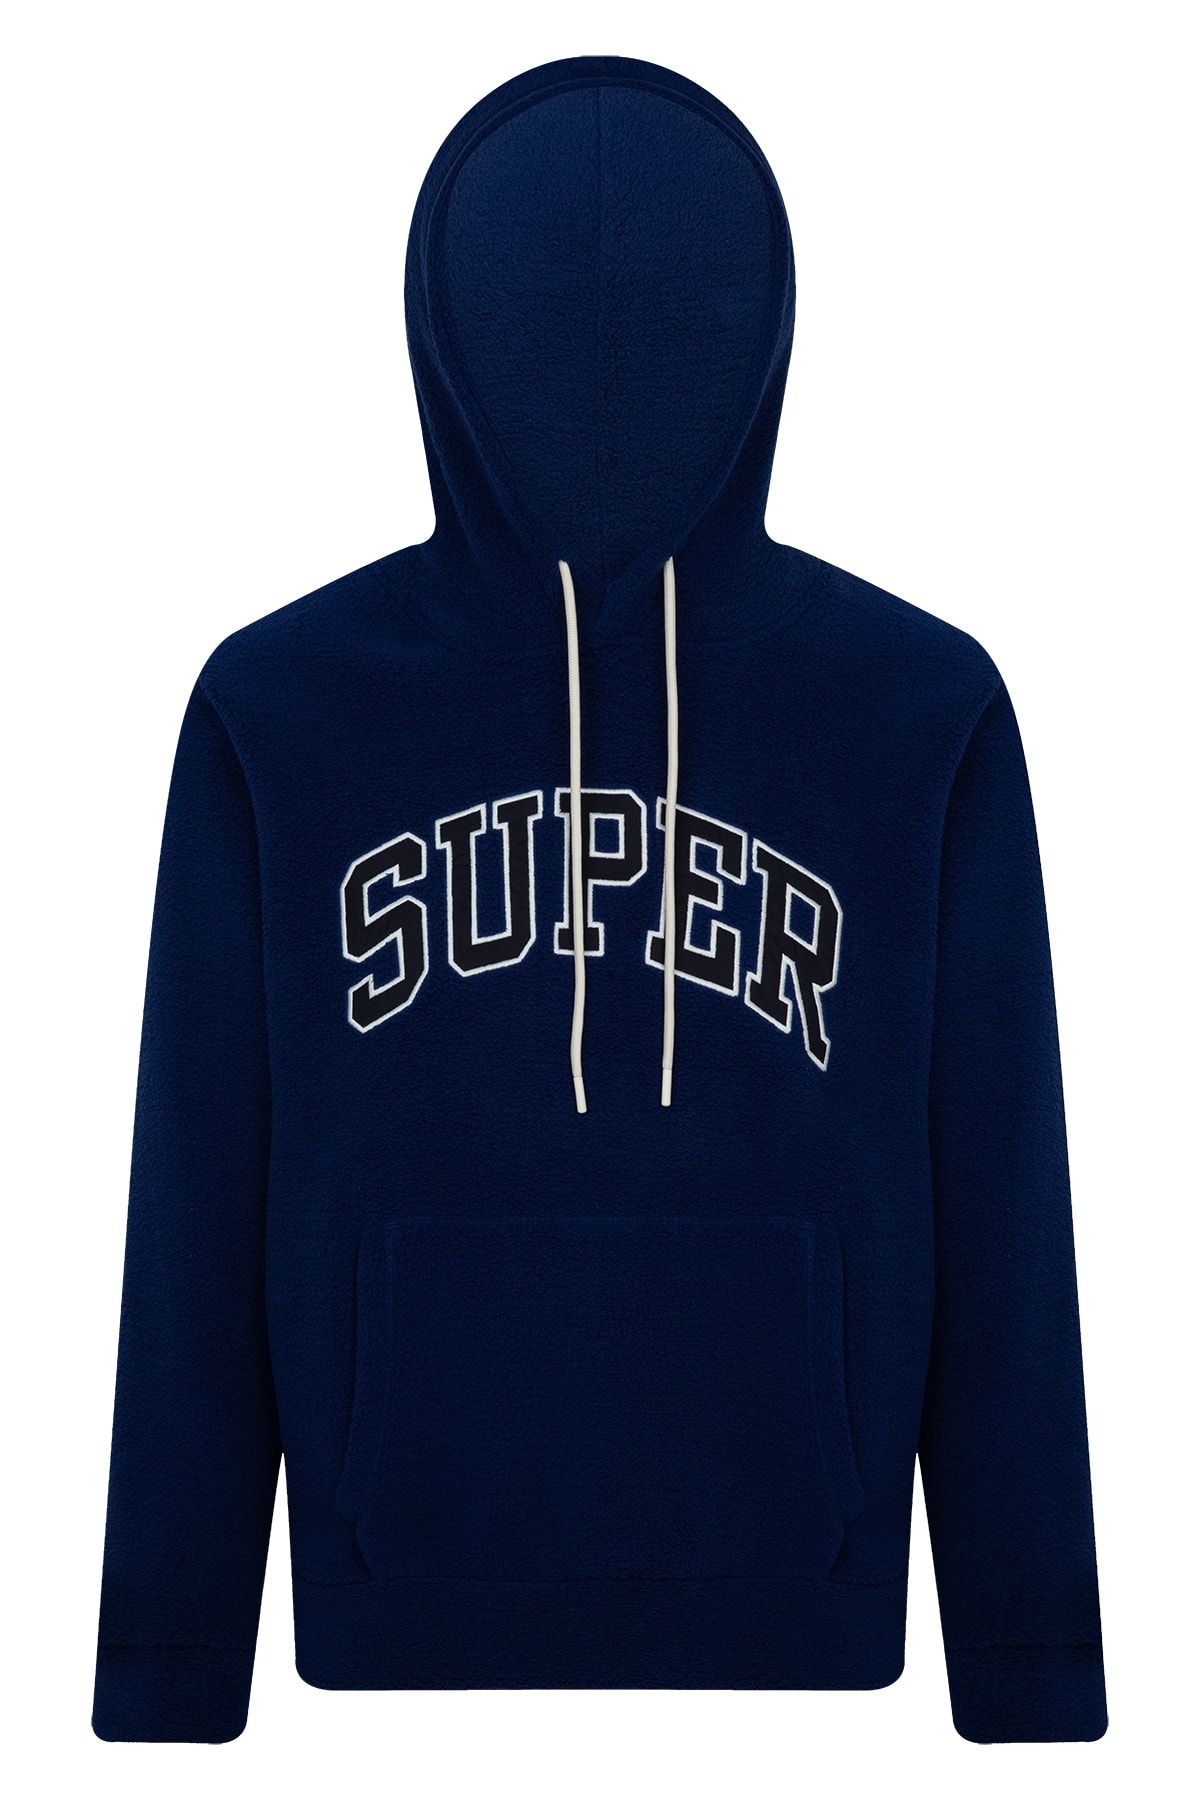 Superfly Men Kapüşonlu Sweat Mavi Sweatshirt 23207-21